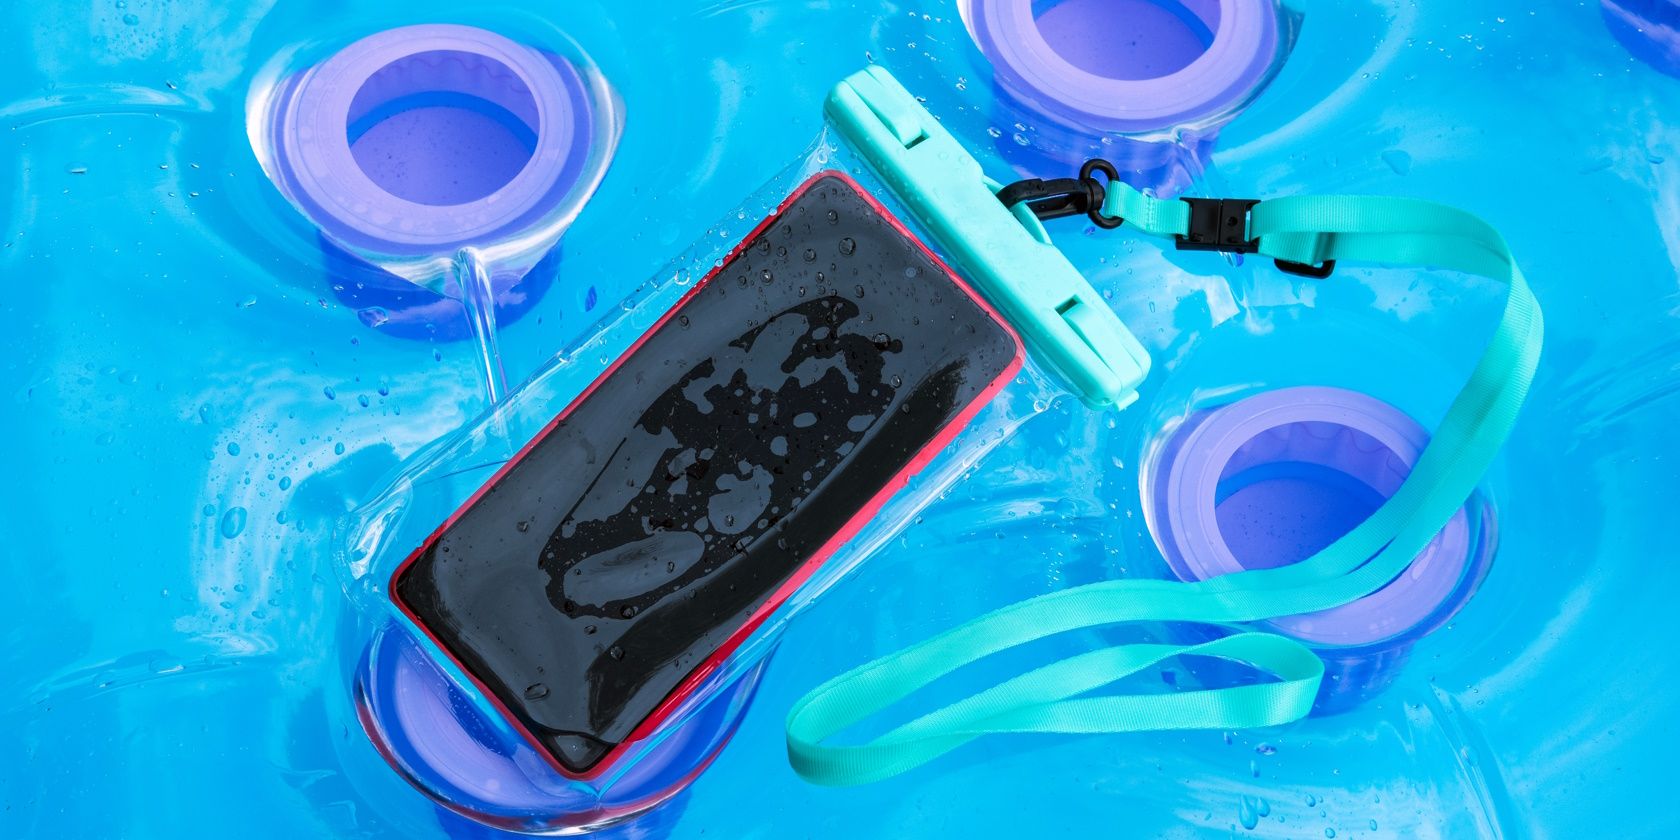 Phone in waterproof pouch floating in pool